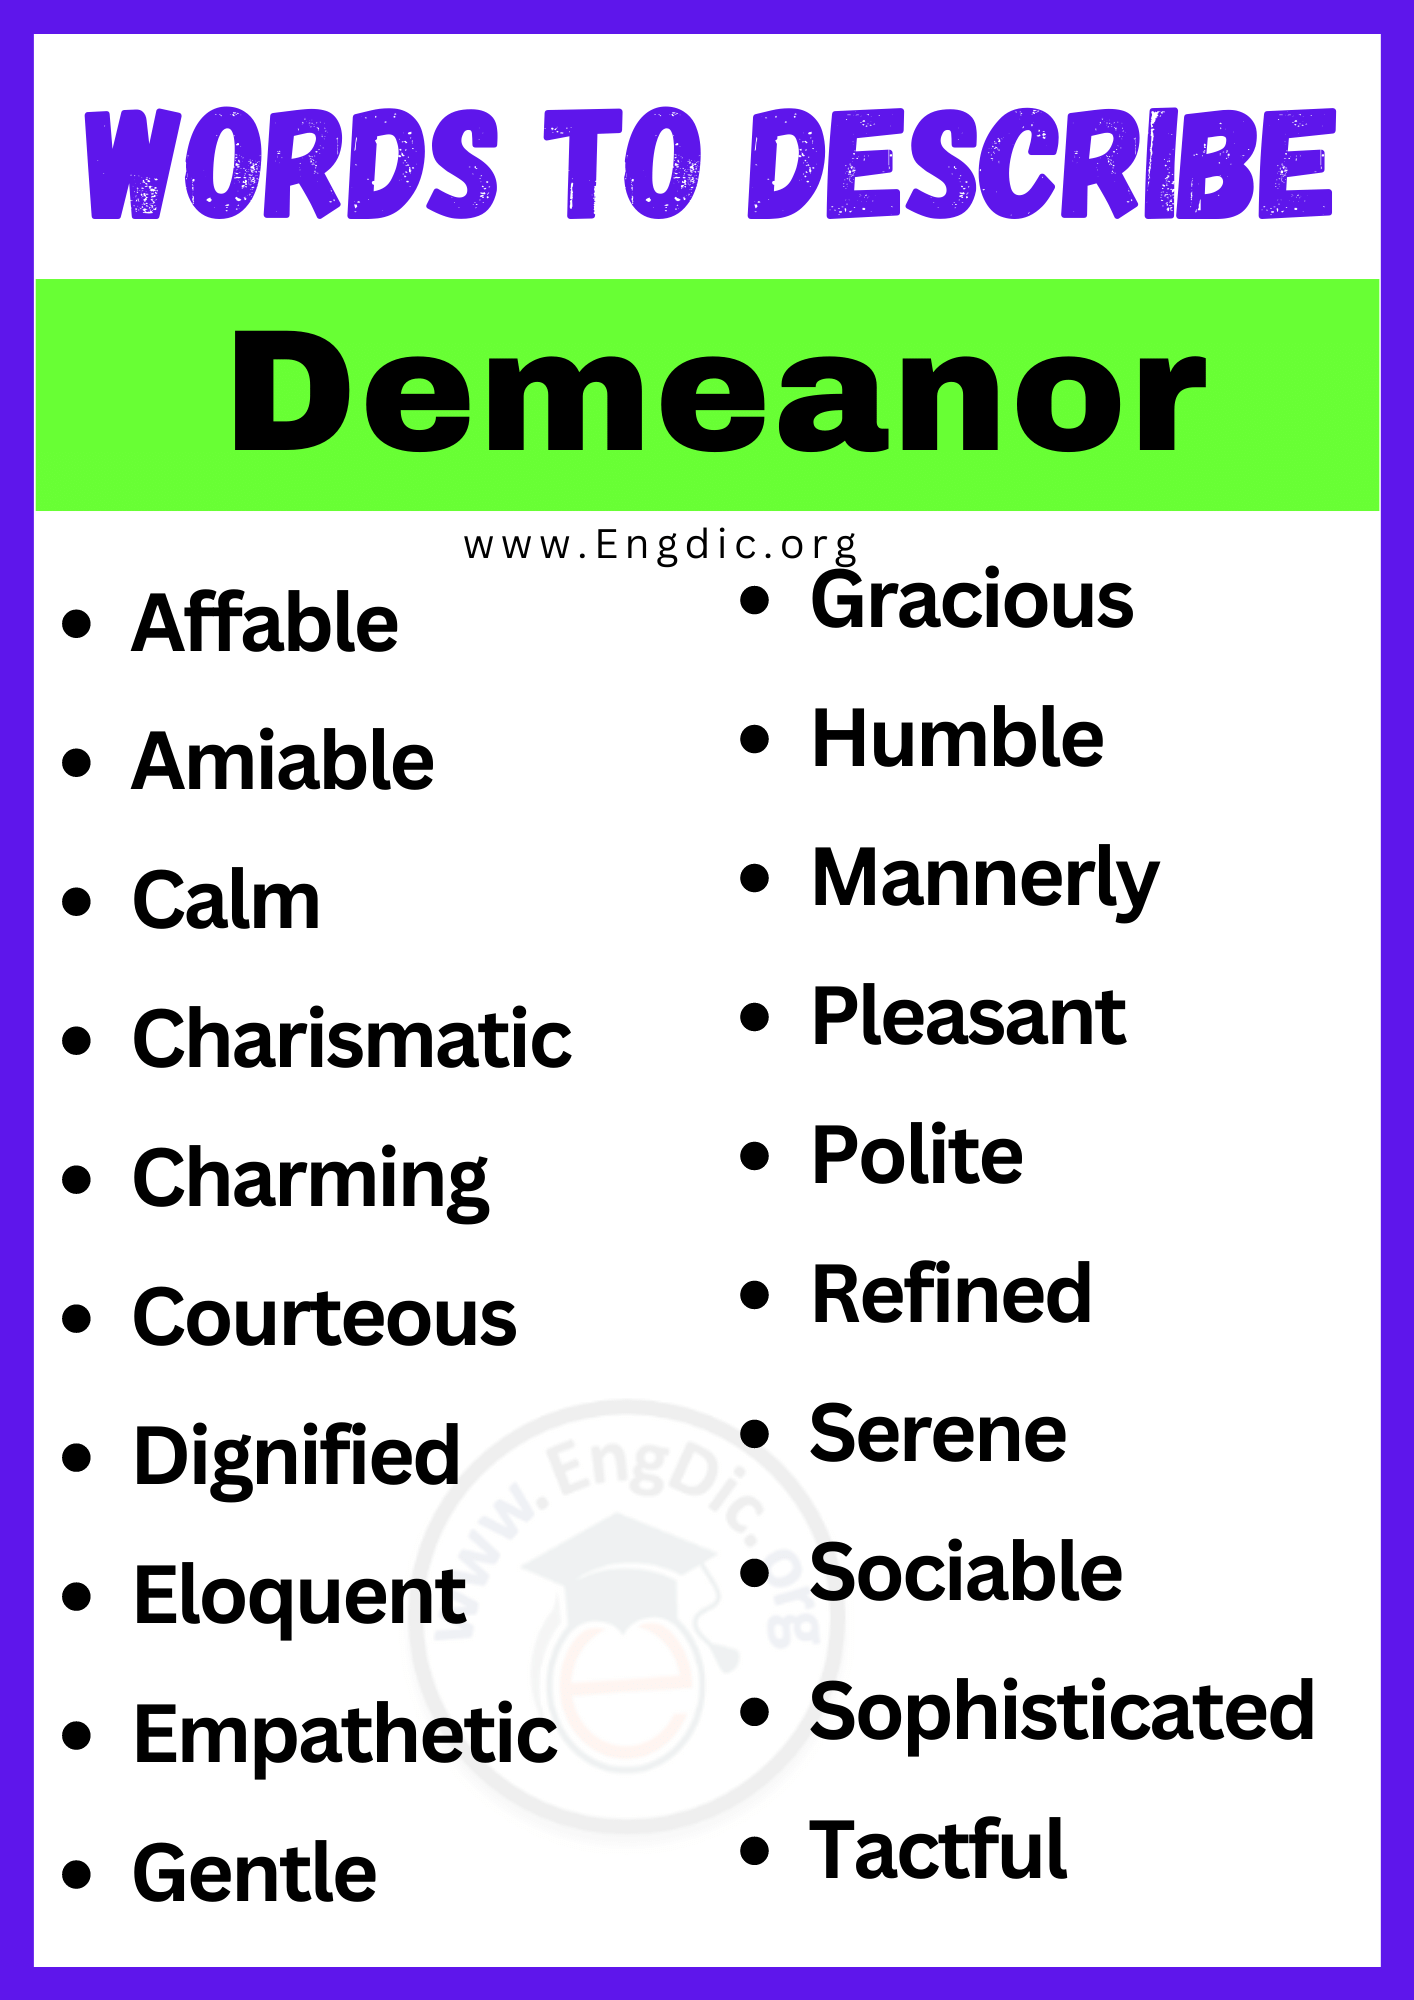 Words to Describe Demeanor